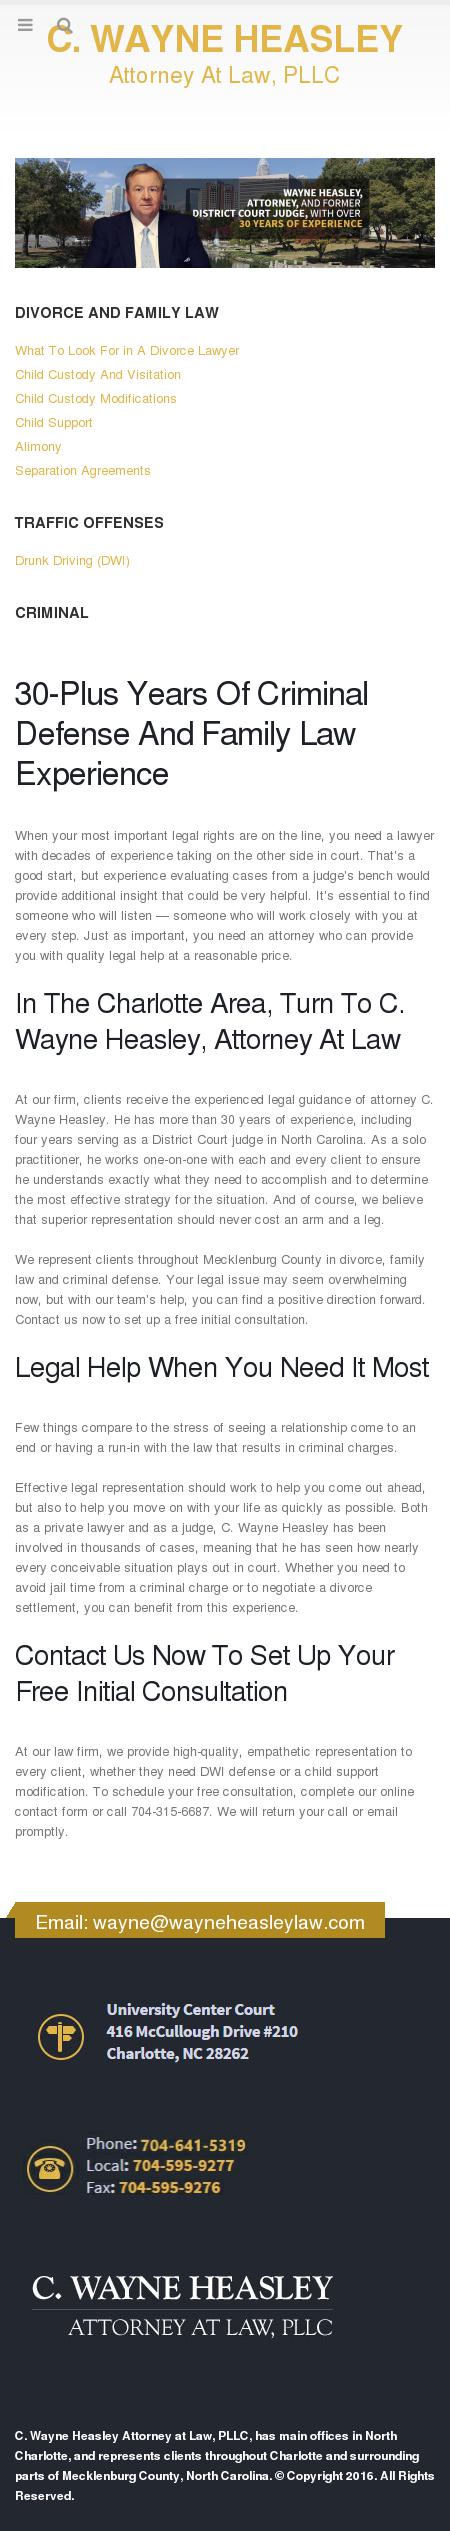 C. Wayne Heasley Attorney at Law, PLLC - Charlotte NC Lawyers